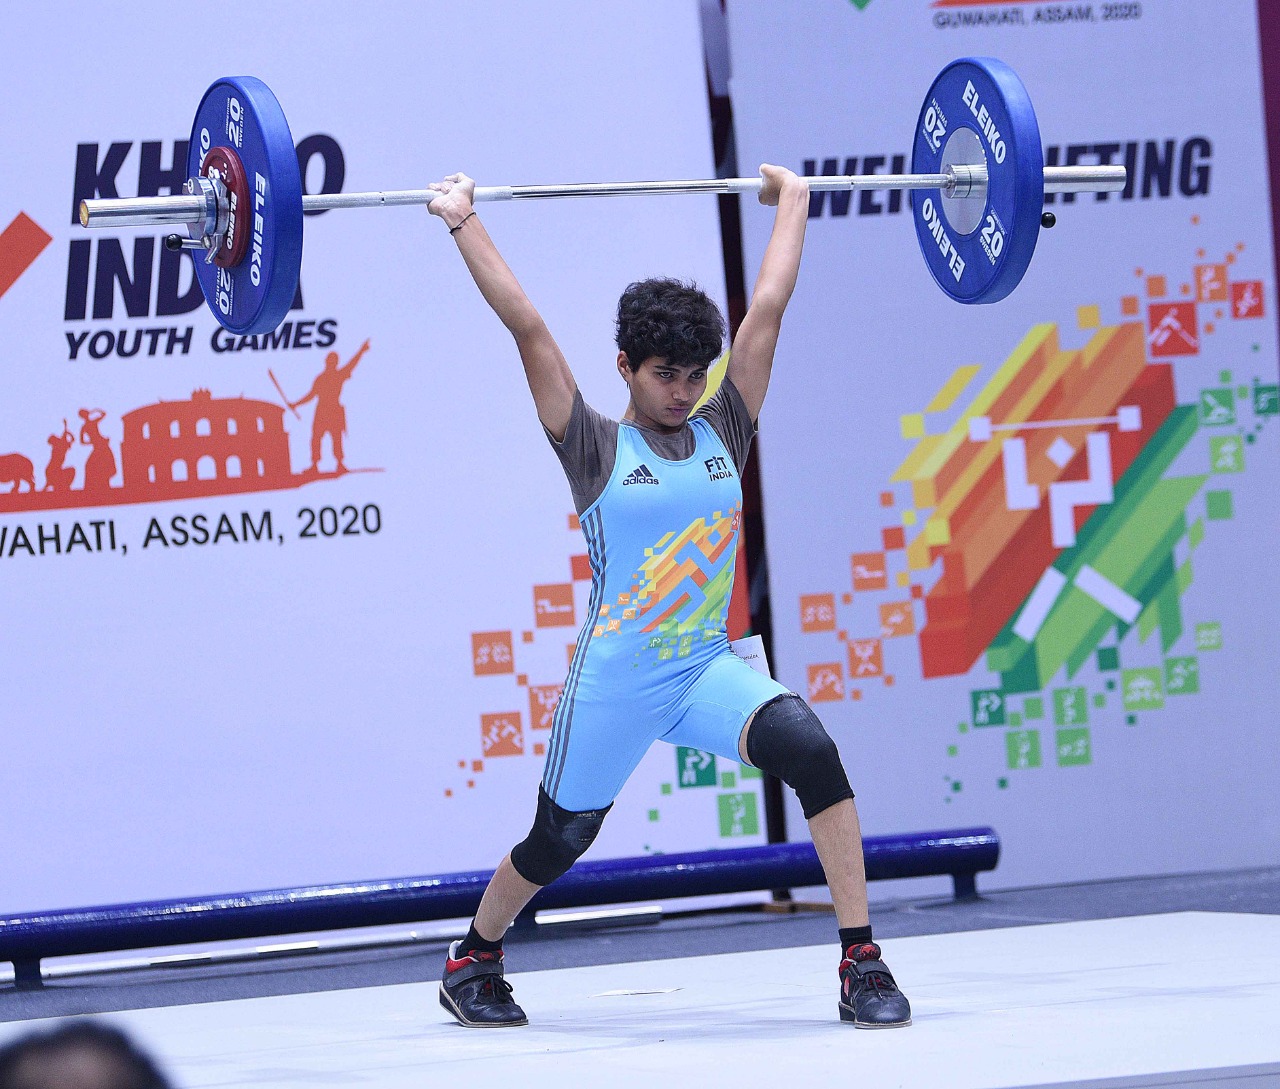 KIYG: Chitraprava Chetiya Clinched Bronze in Weight Lifting